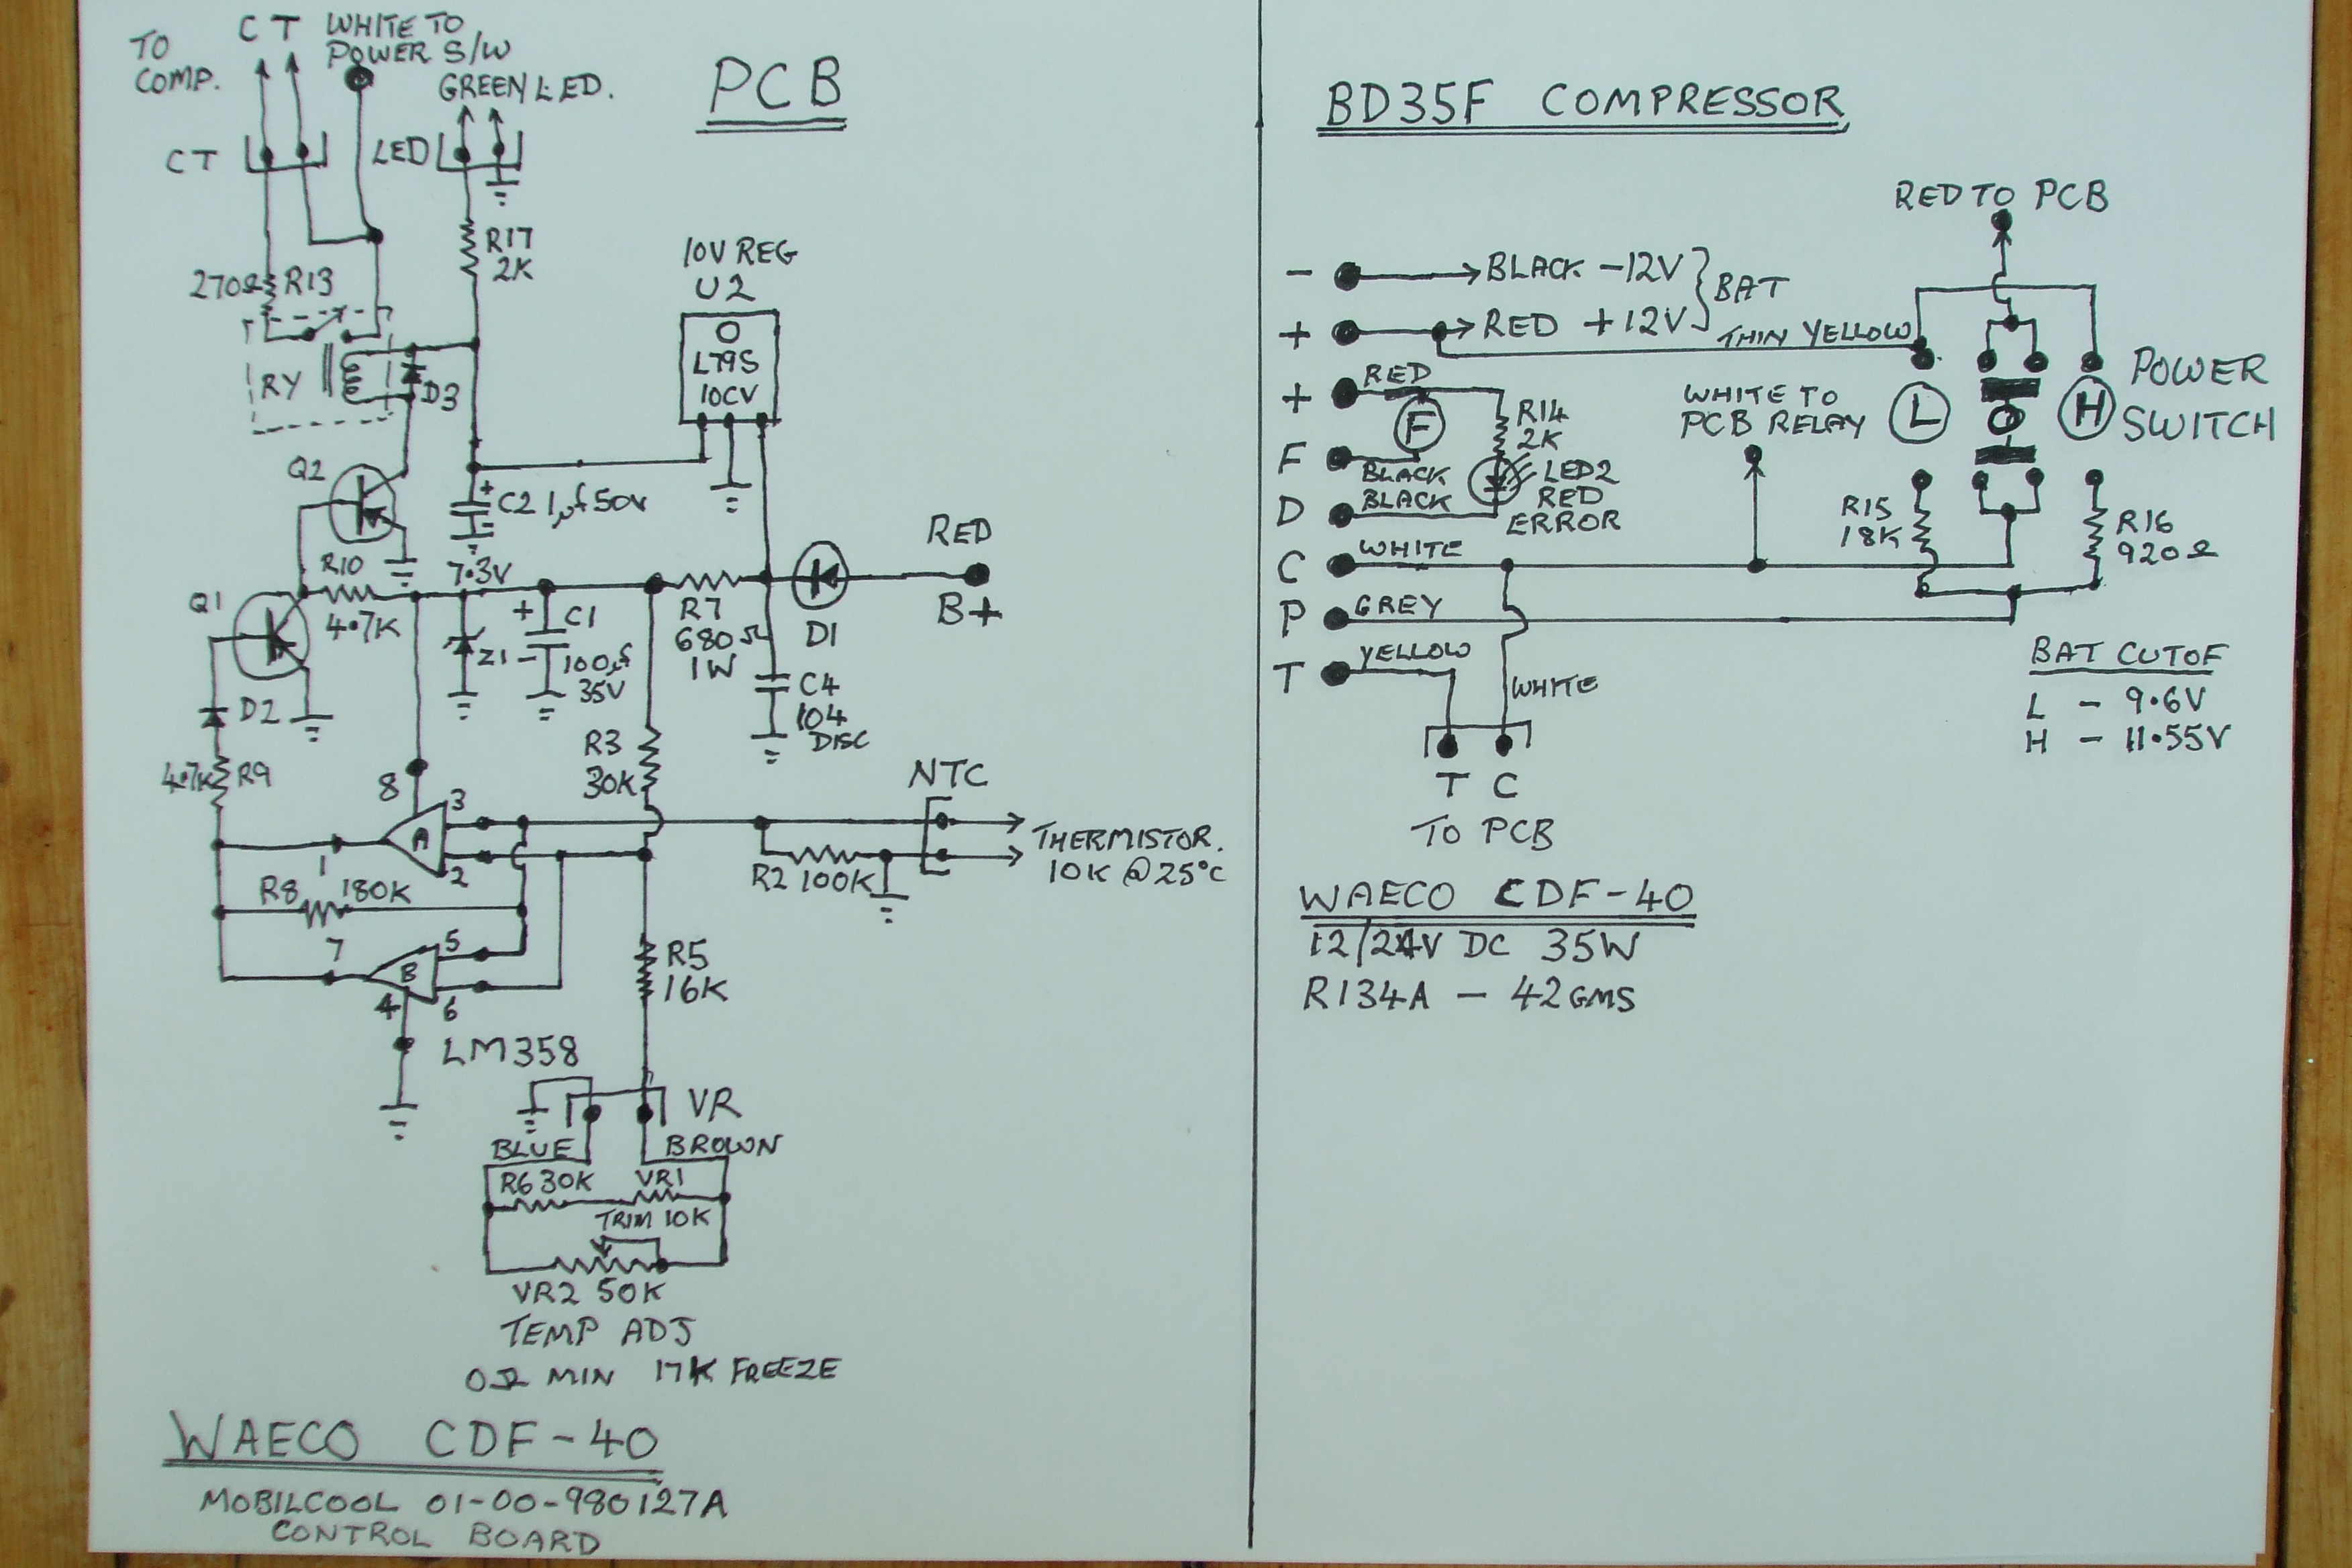 WAECO CDF-40 Circuit Diagram